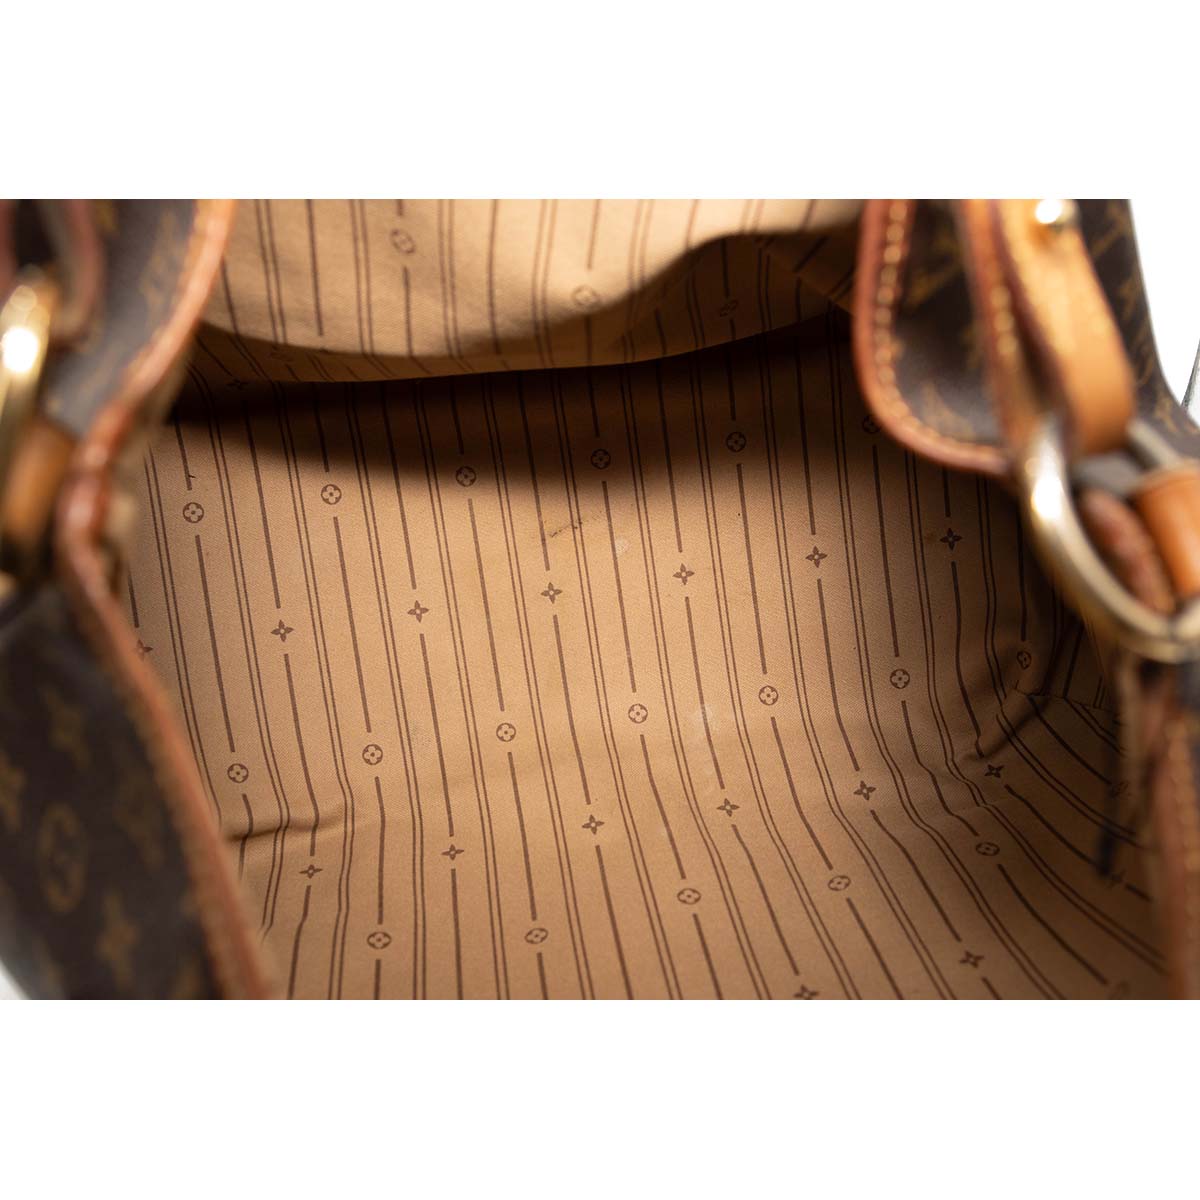 Louis Vuitton Monogram Delightful GM - Brown Hobos, Handbags